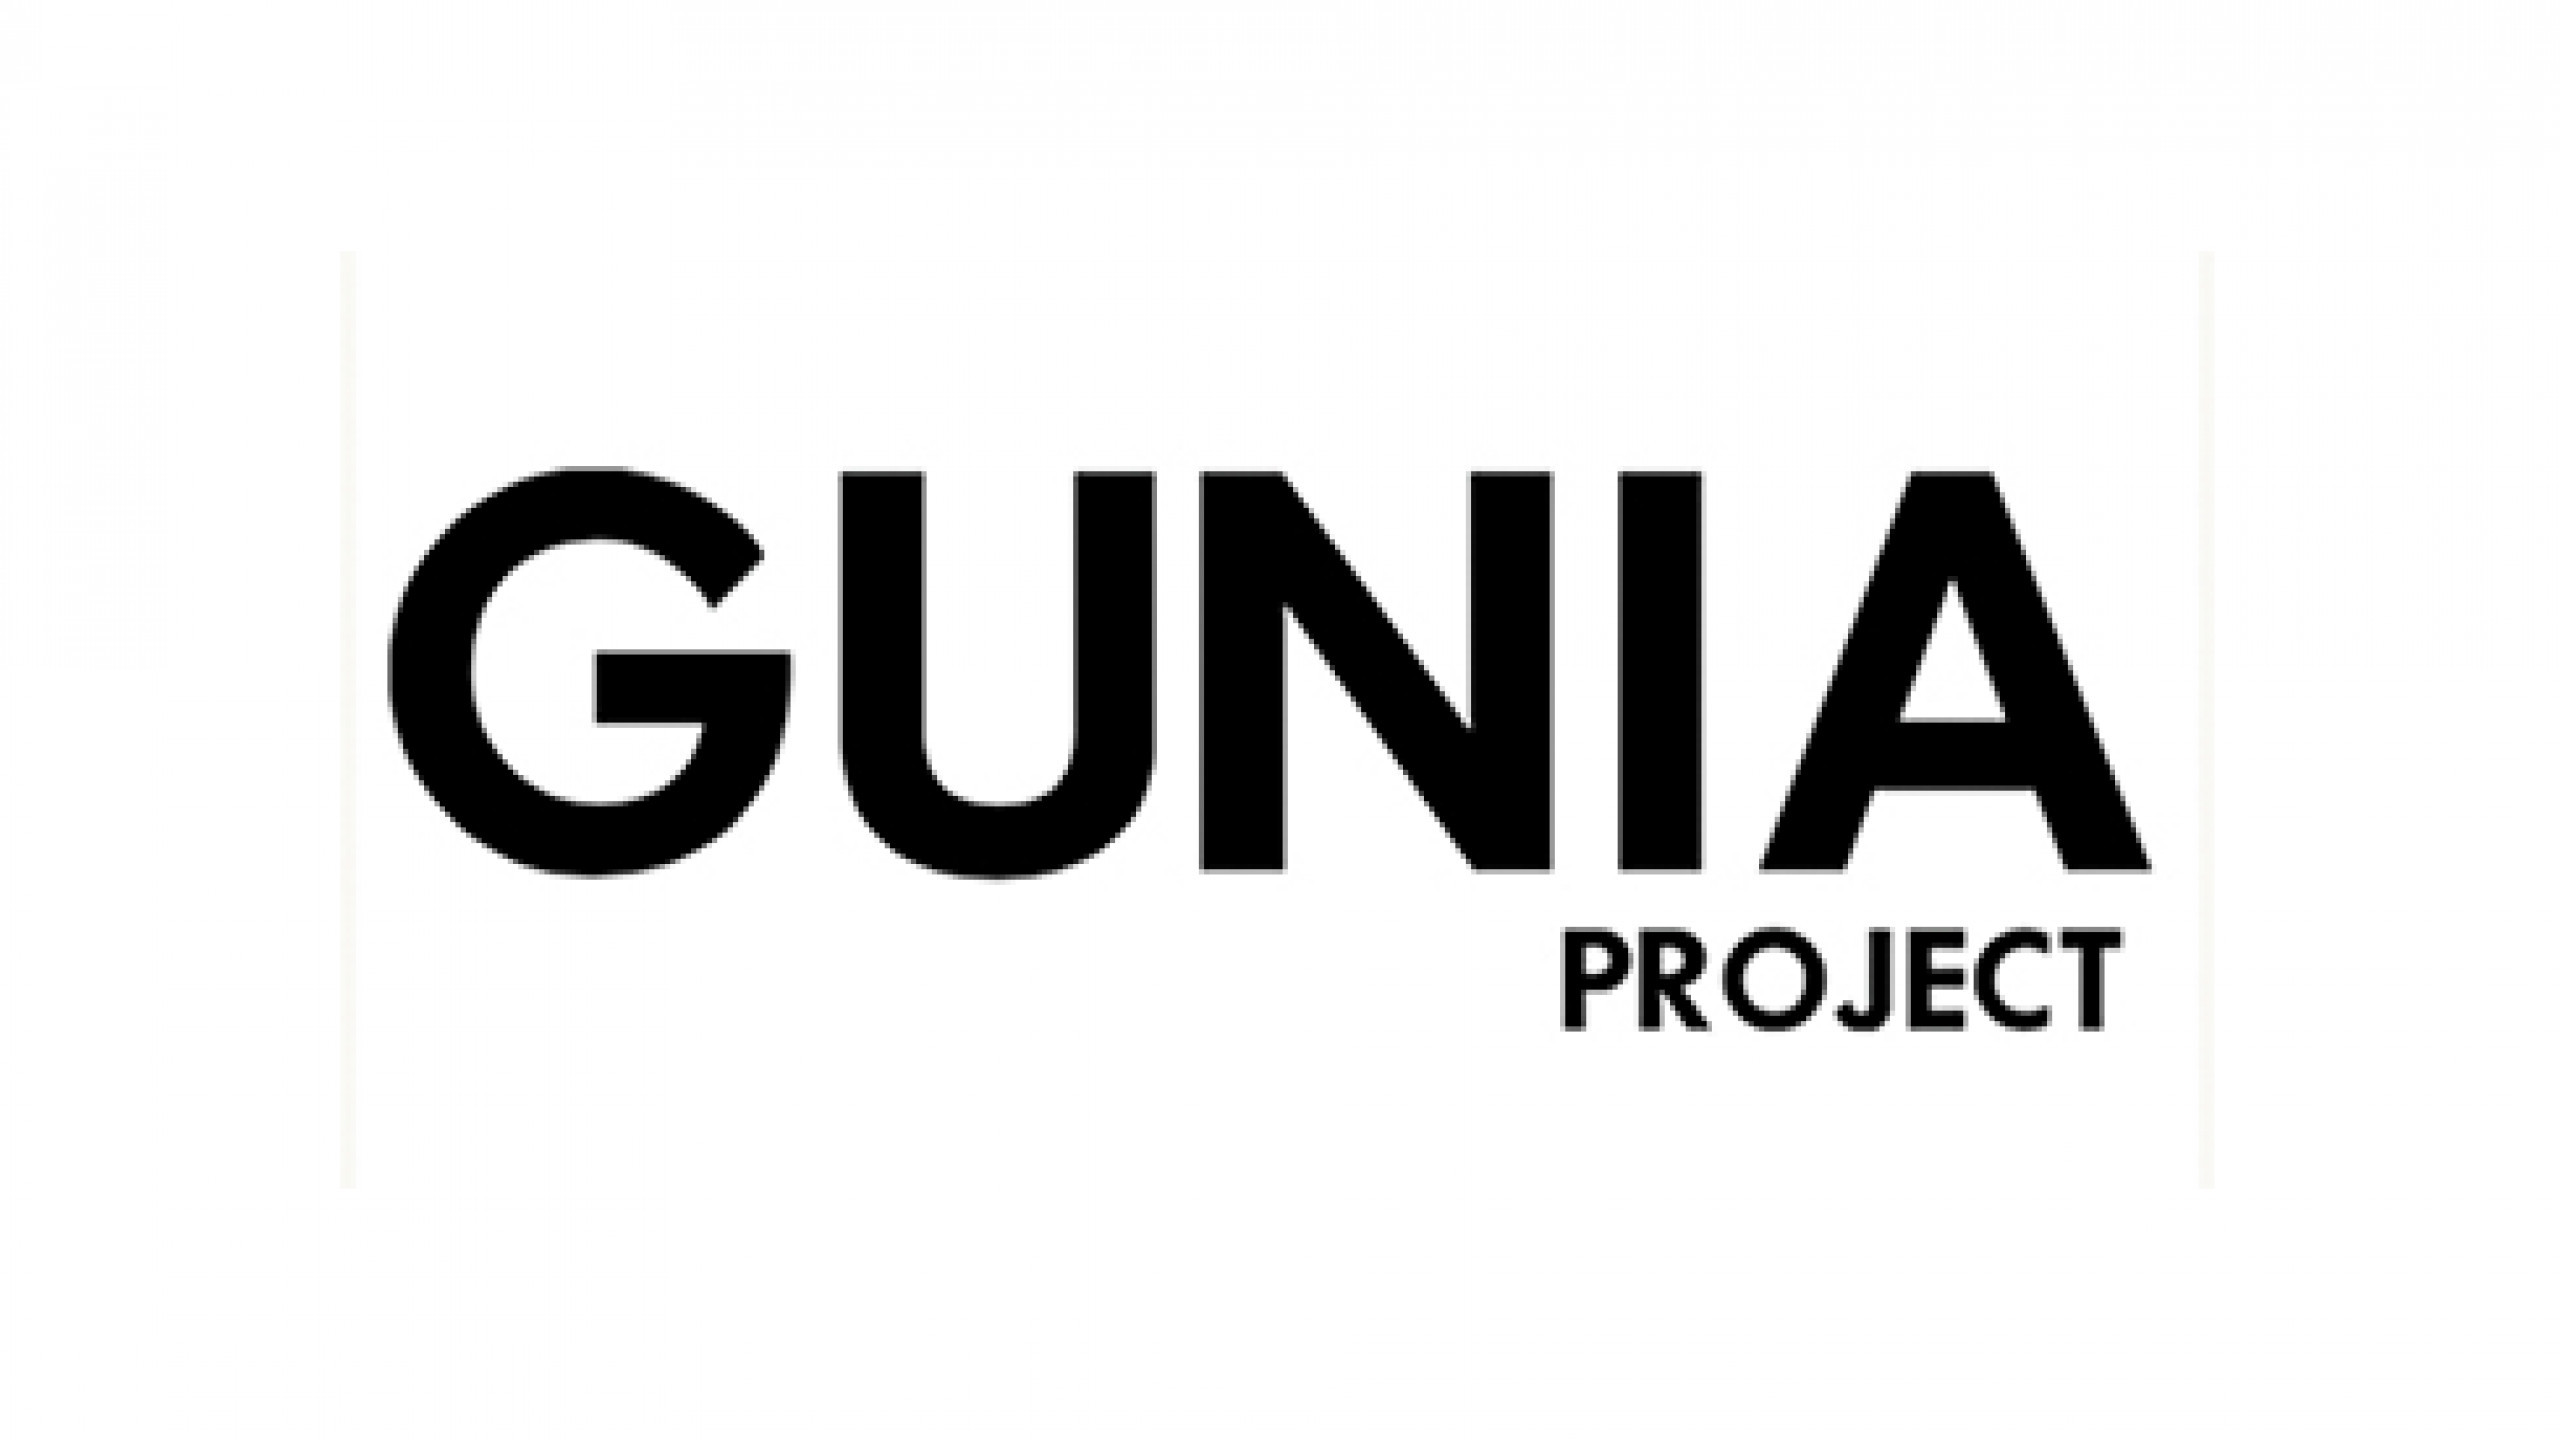 Gunia Project